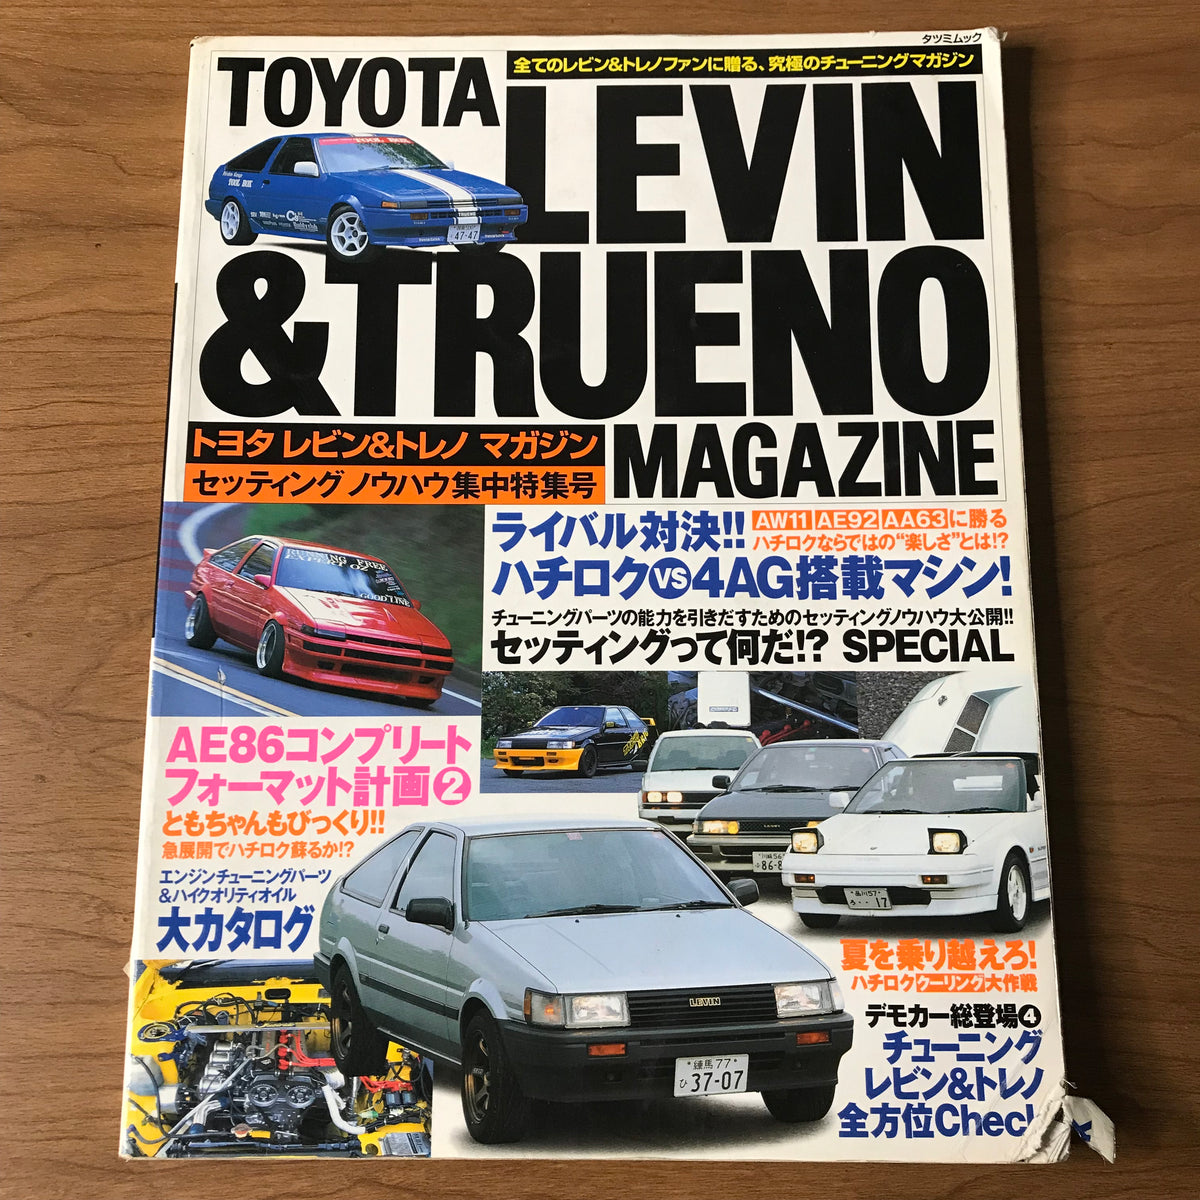 Tatsumi Mook Toyota Levin & Trueno JDM Magazine Vol 4 – The Parts